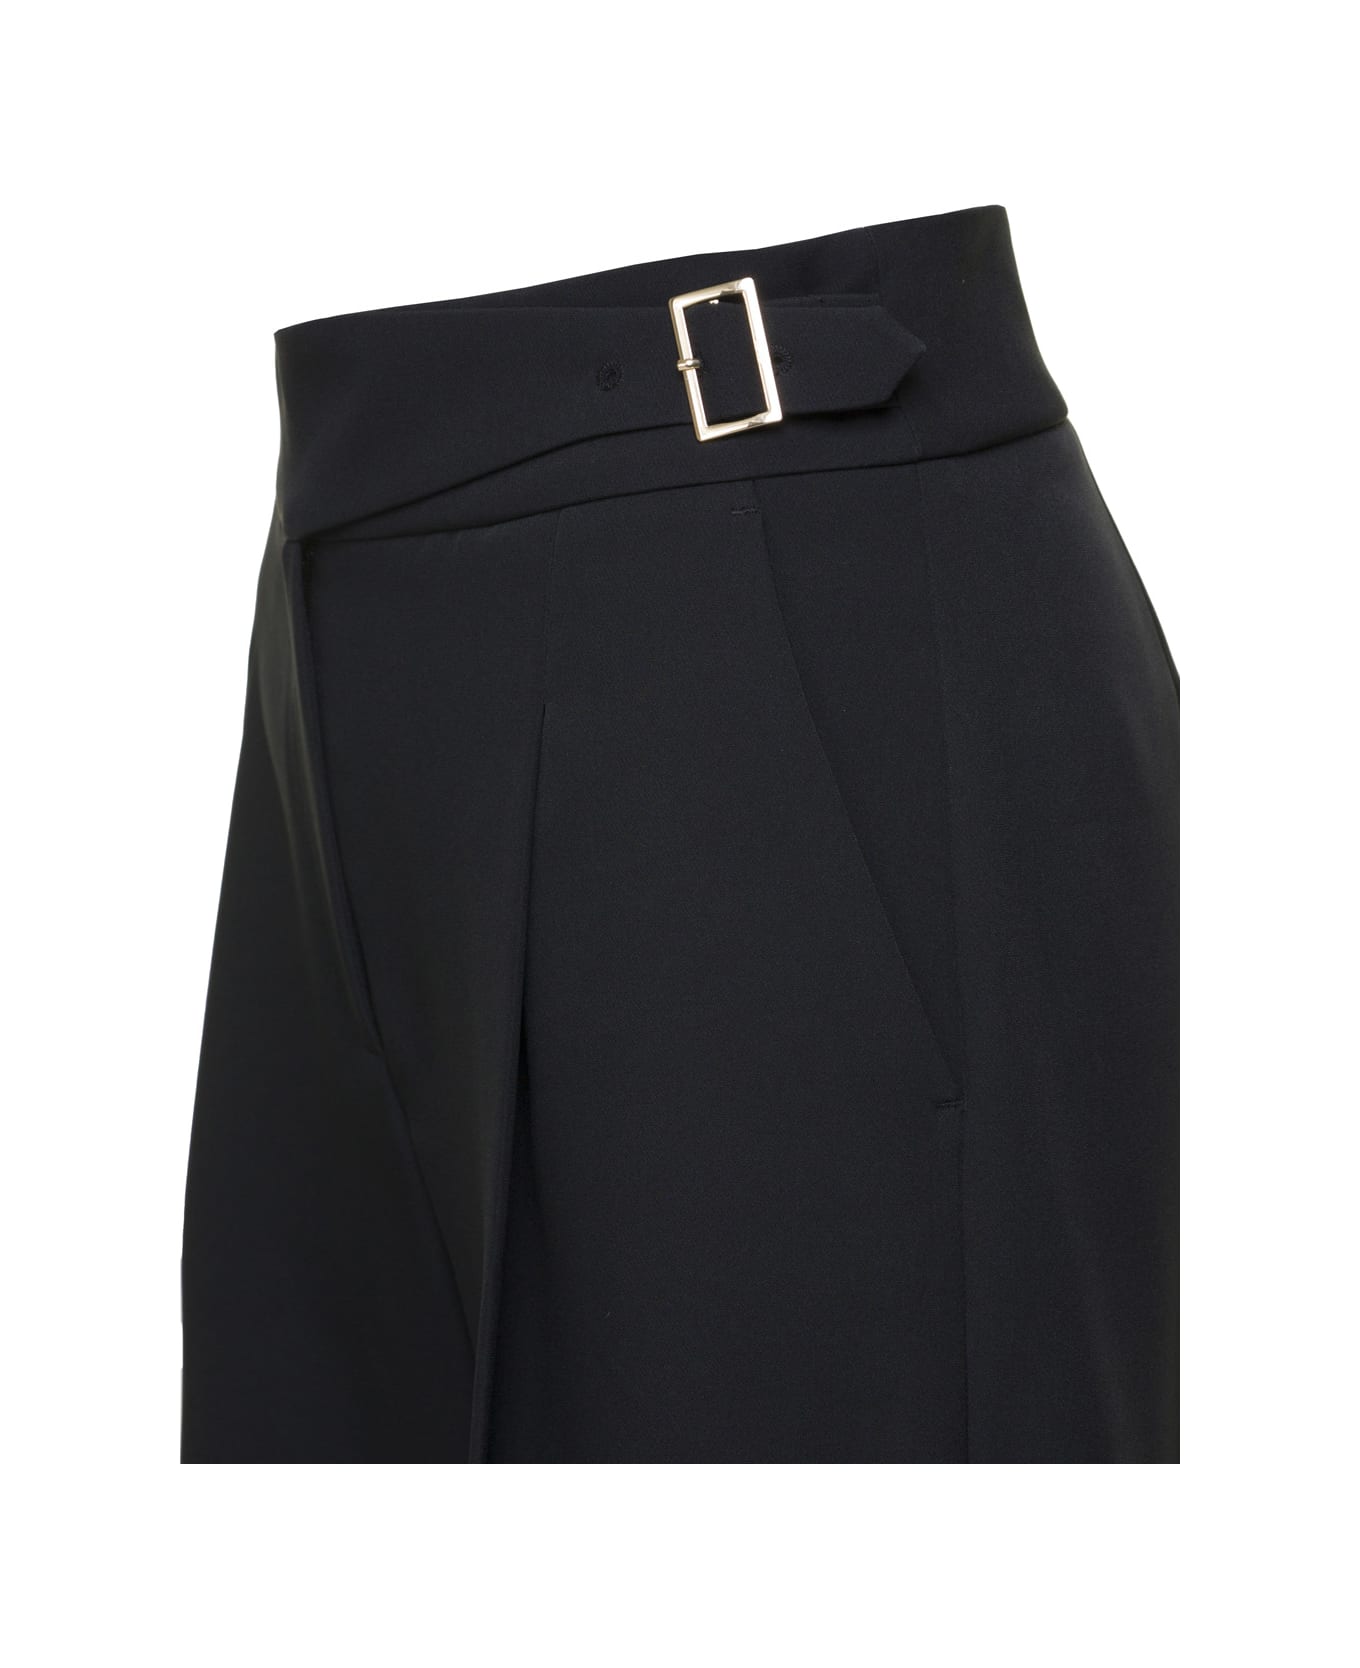 Liu-Jo Black Palazzo Pants With Darts In Stretch Technical Fabric Woman - Black